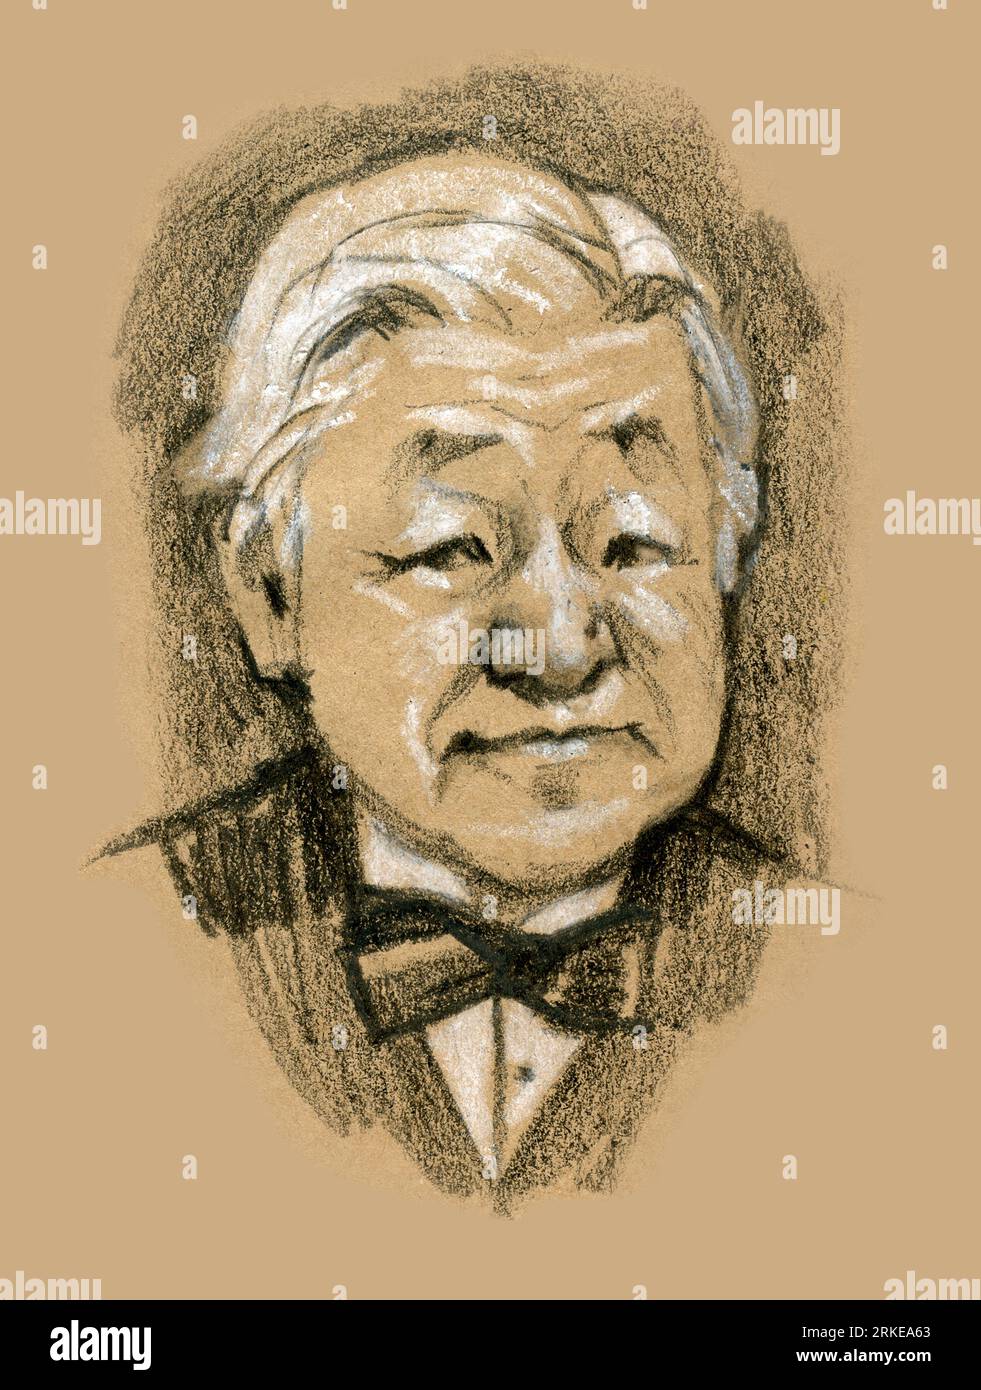 Graphic illustration portrait of Emperor Japan Akihito Stock Photo